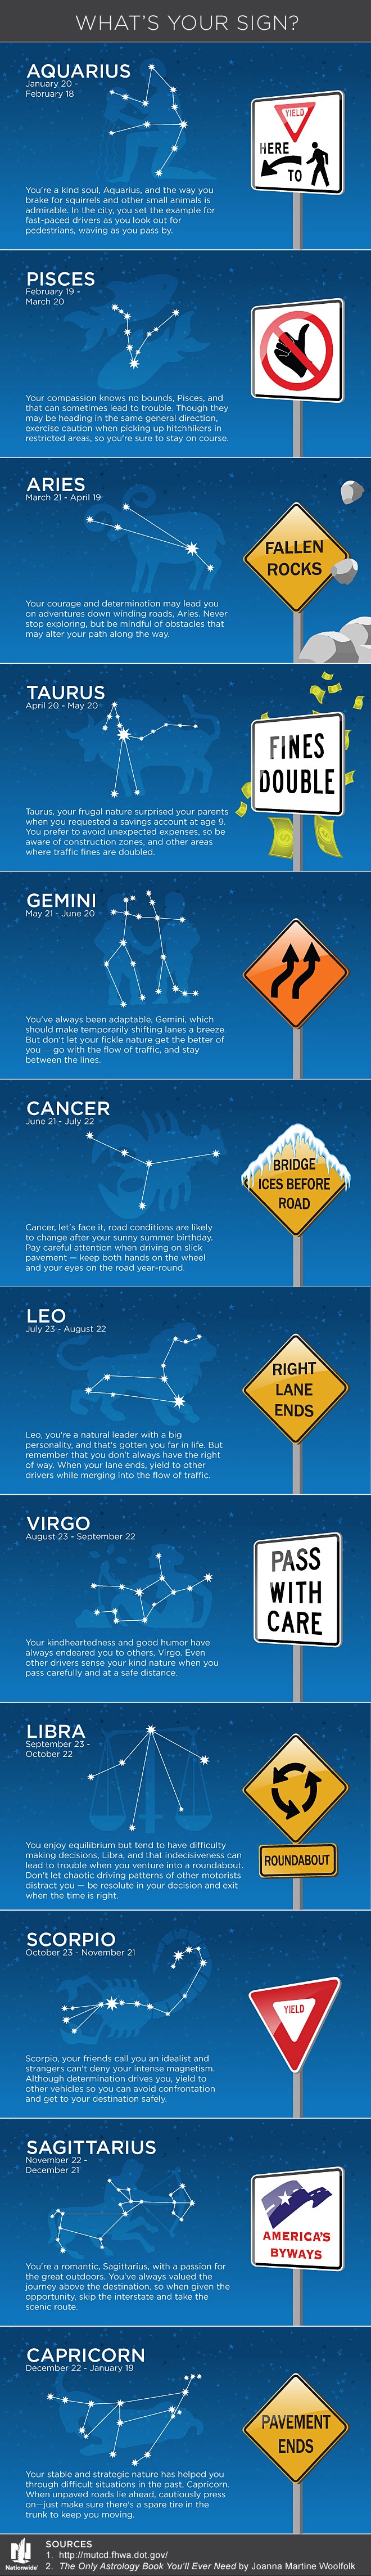 Road Sign Horoscope